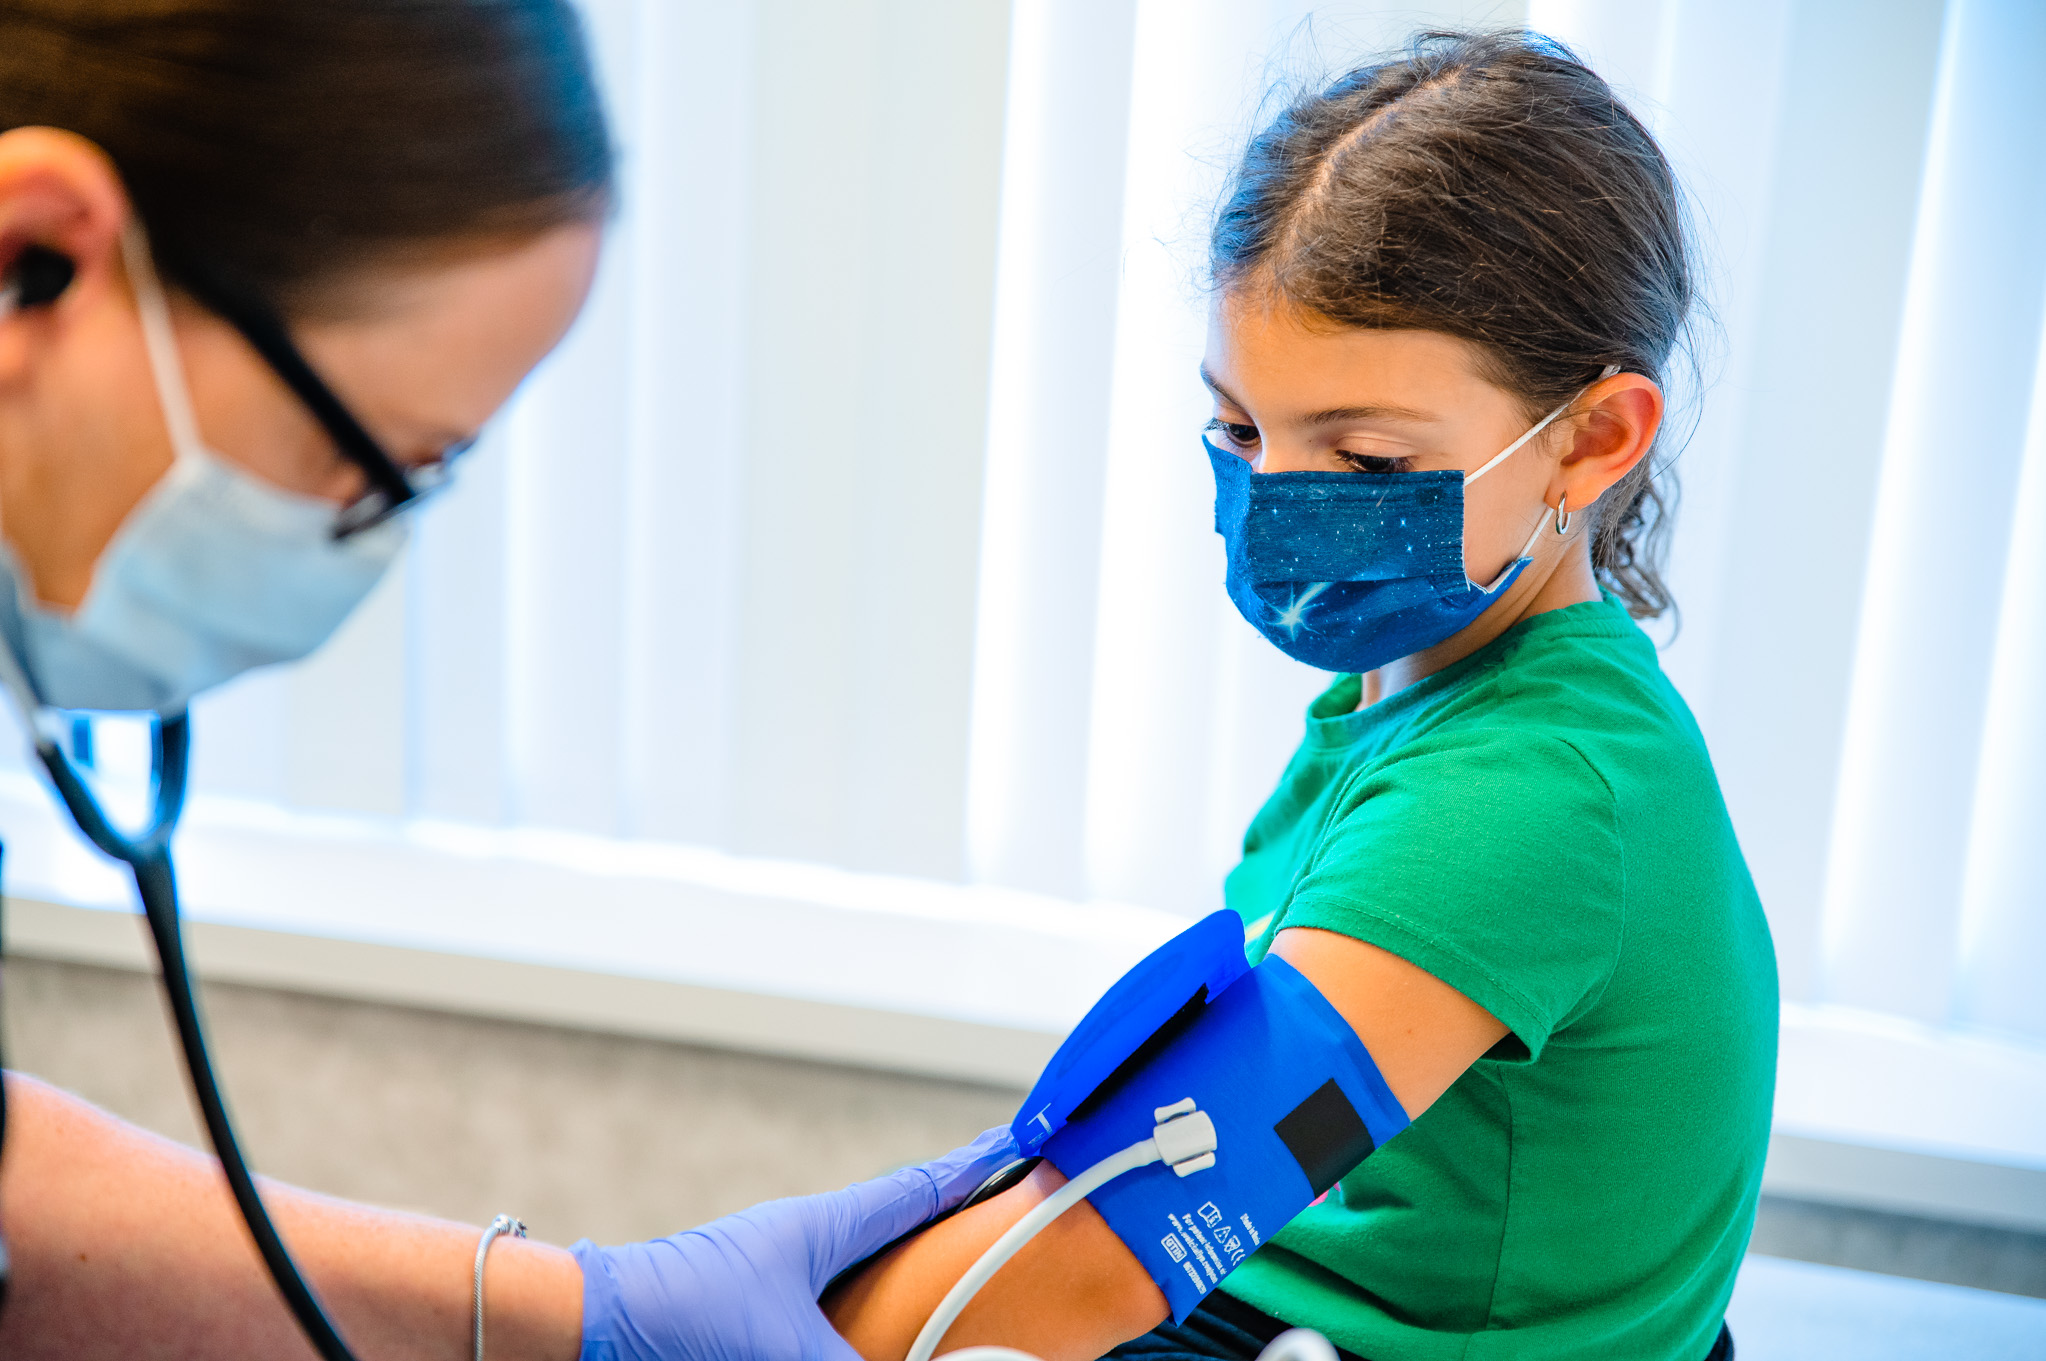 Clinician checks girl's blood pressure